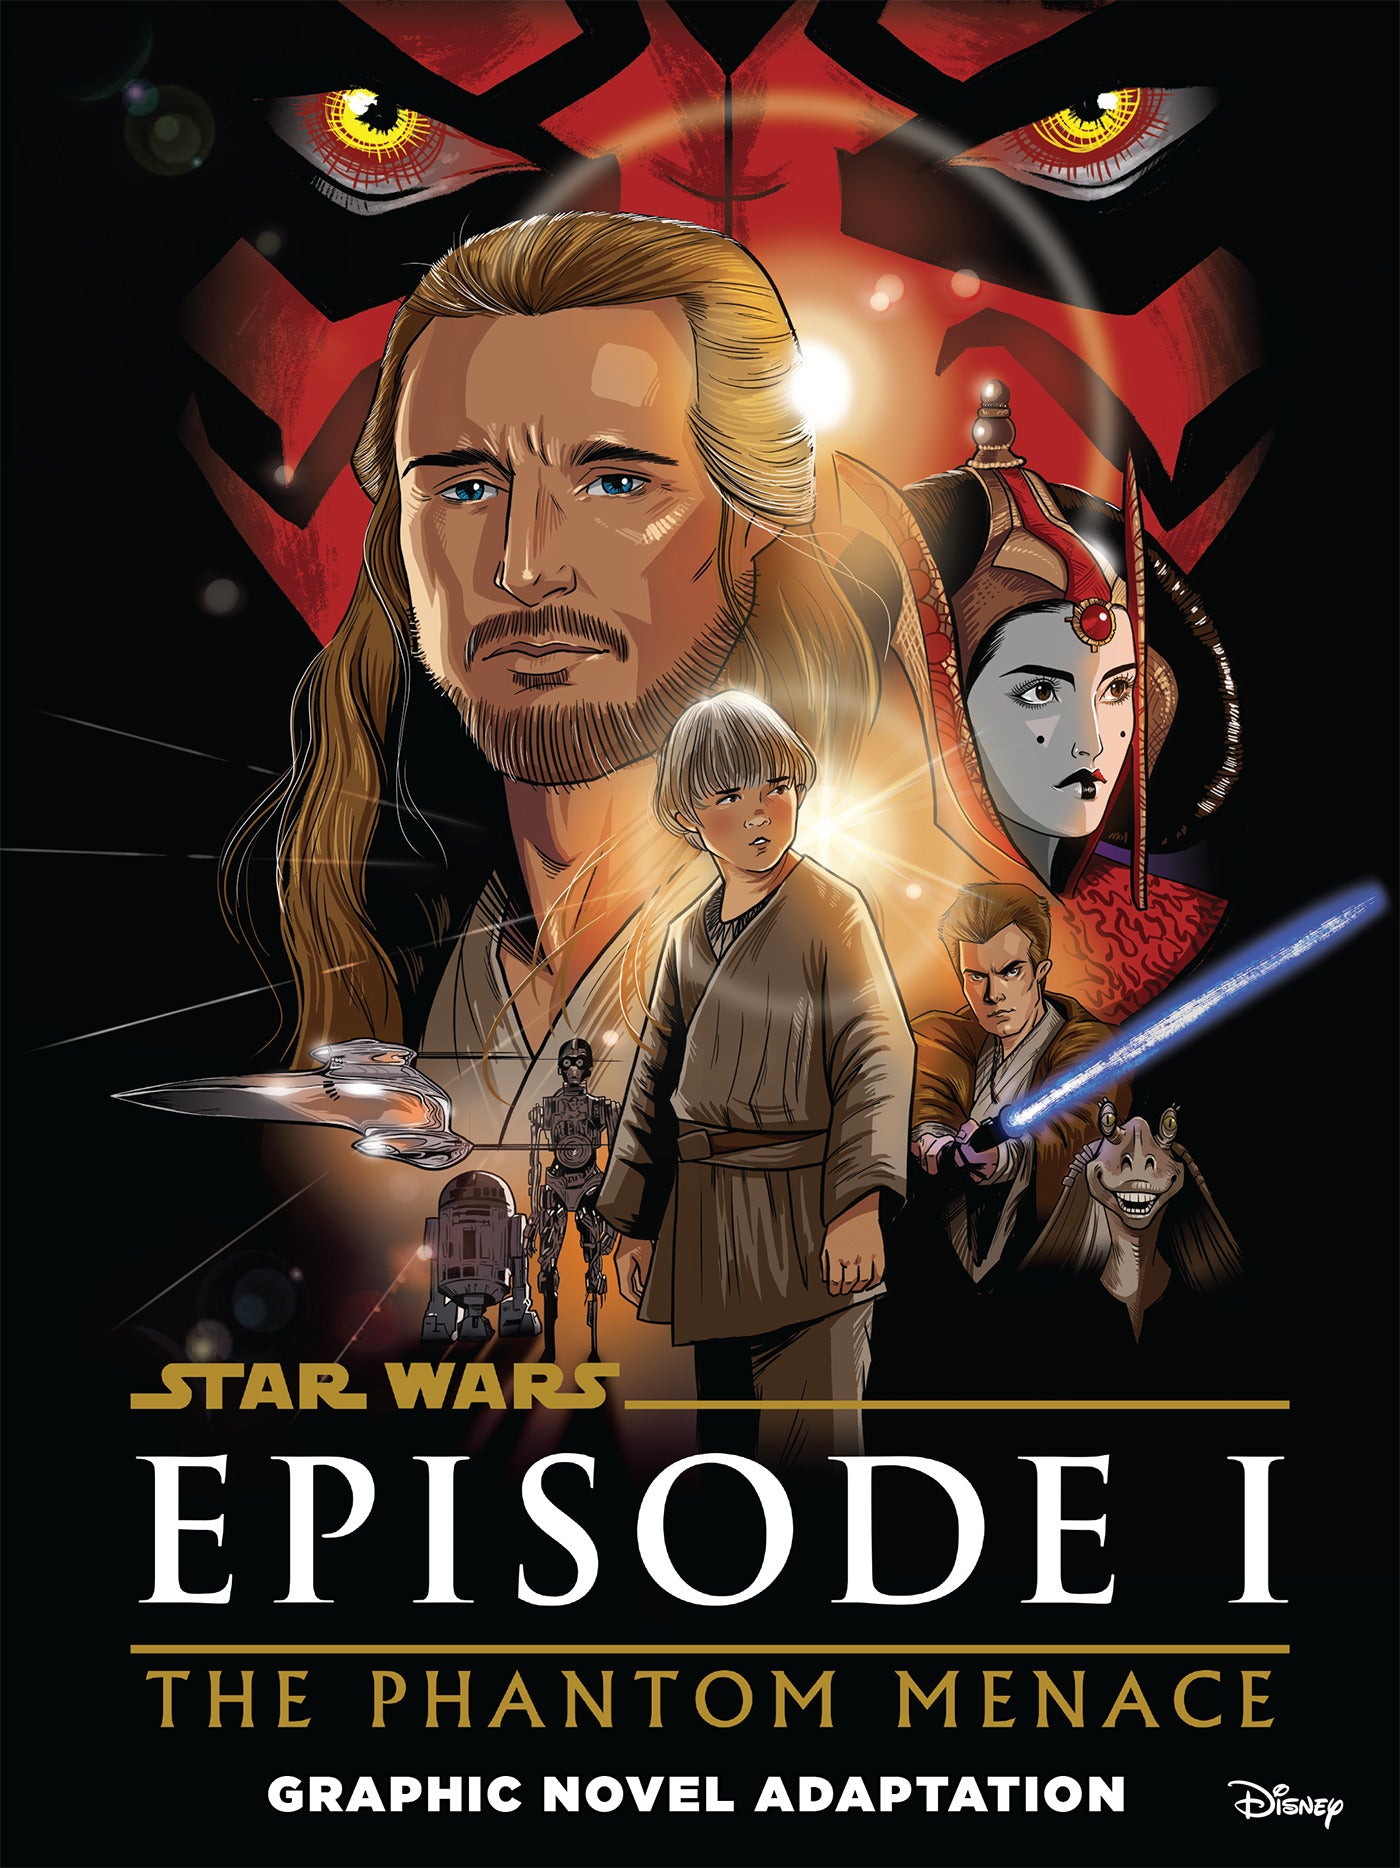 Star Wars: The Phantom Menace Graphic Novel Adaptation